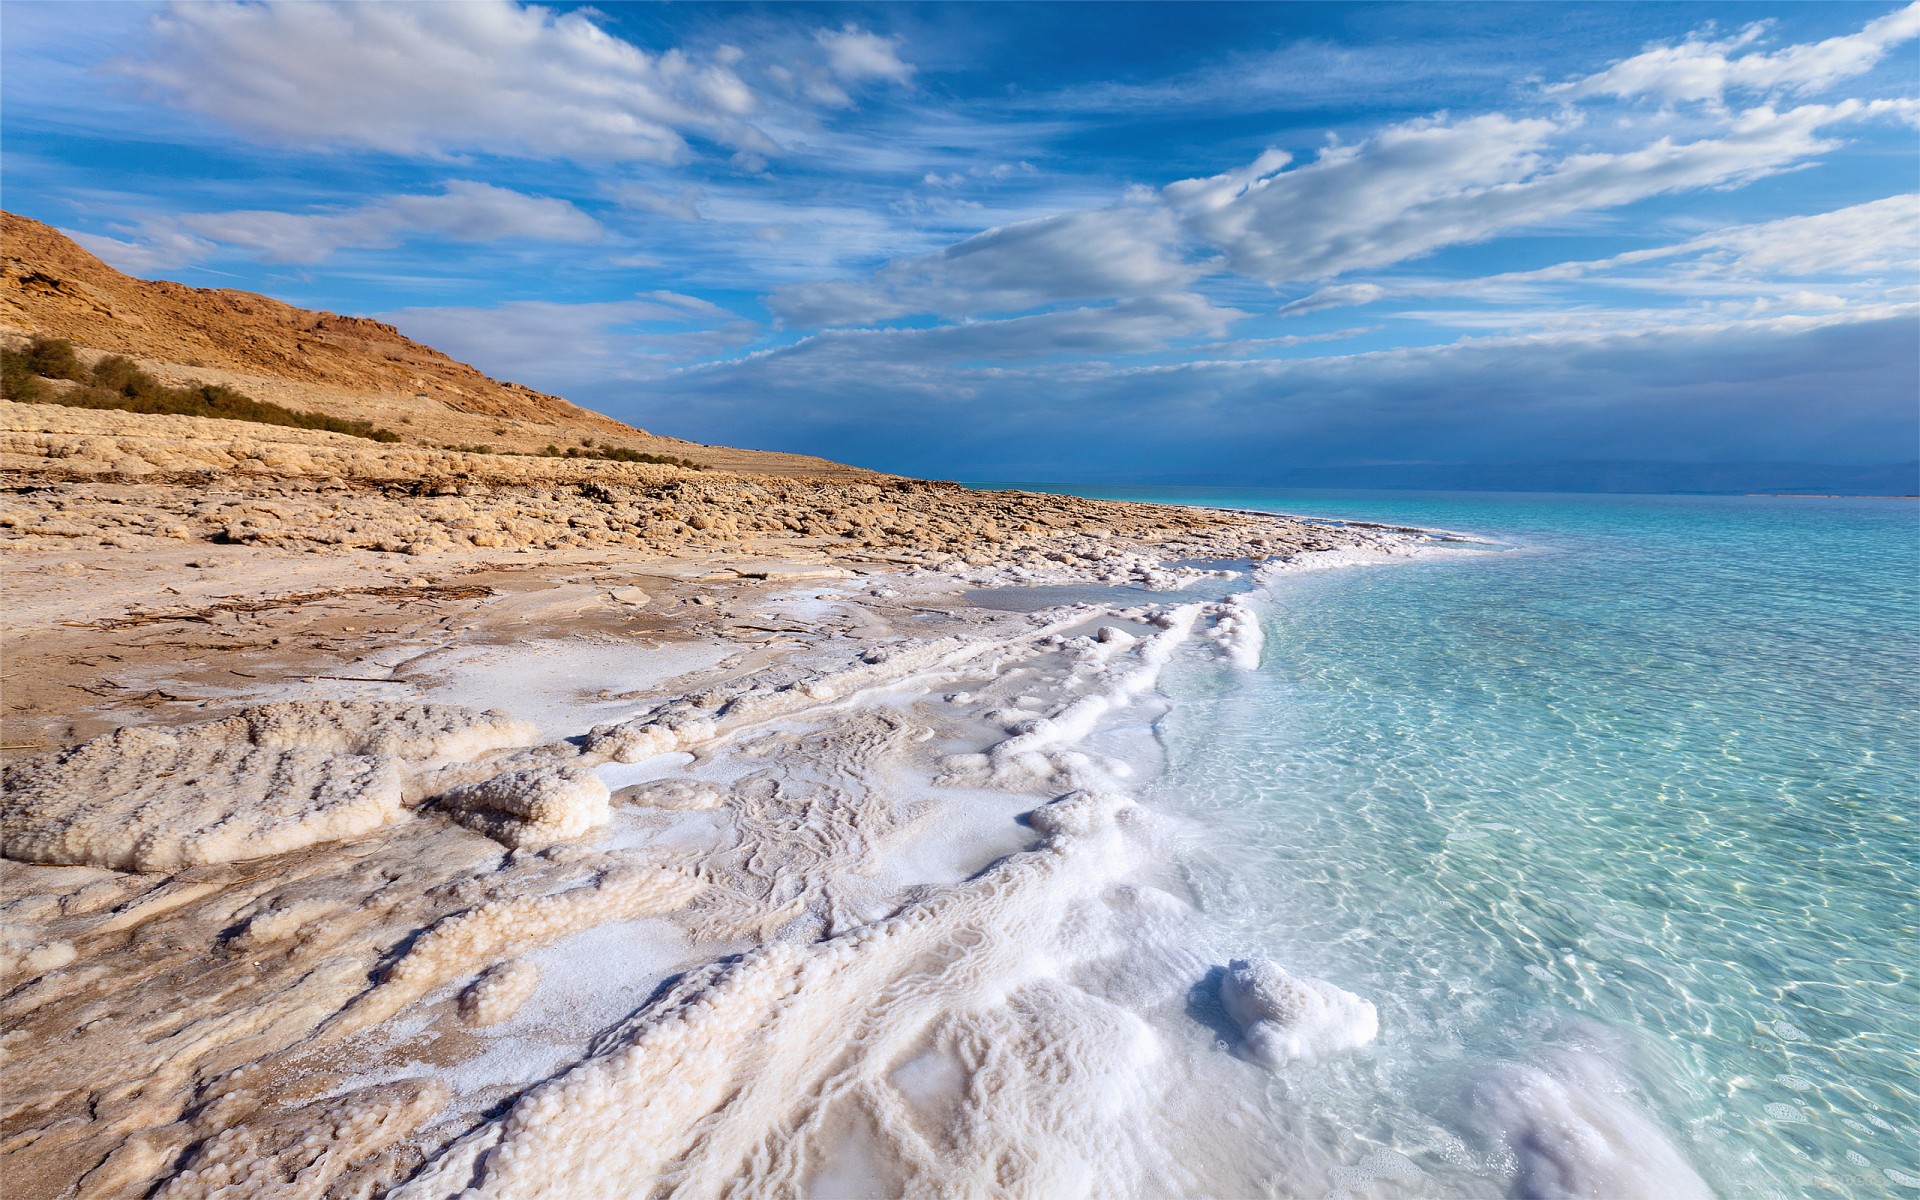 Dead Sea. Israel. Jordan - Care1.com